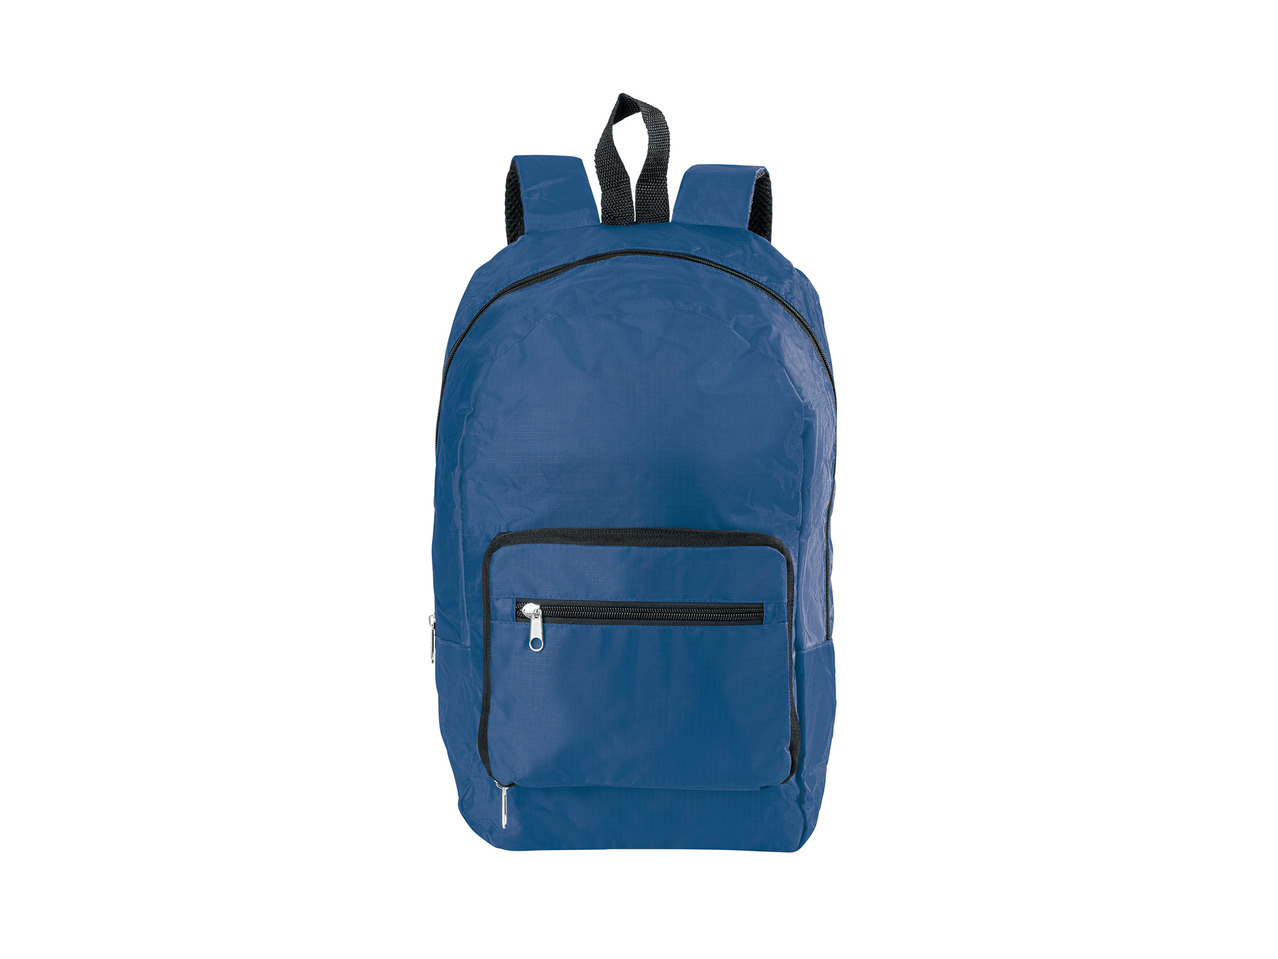 Topmove Foldable Backpack or Bag1